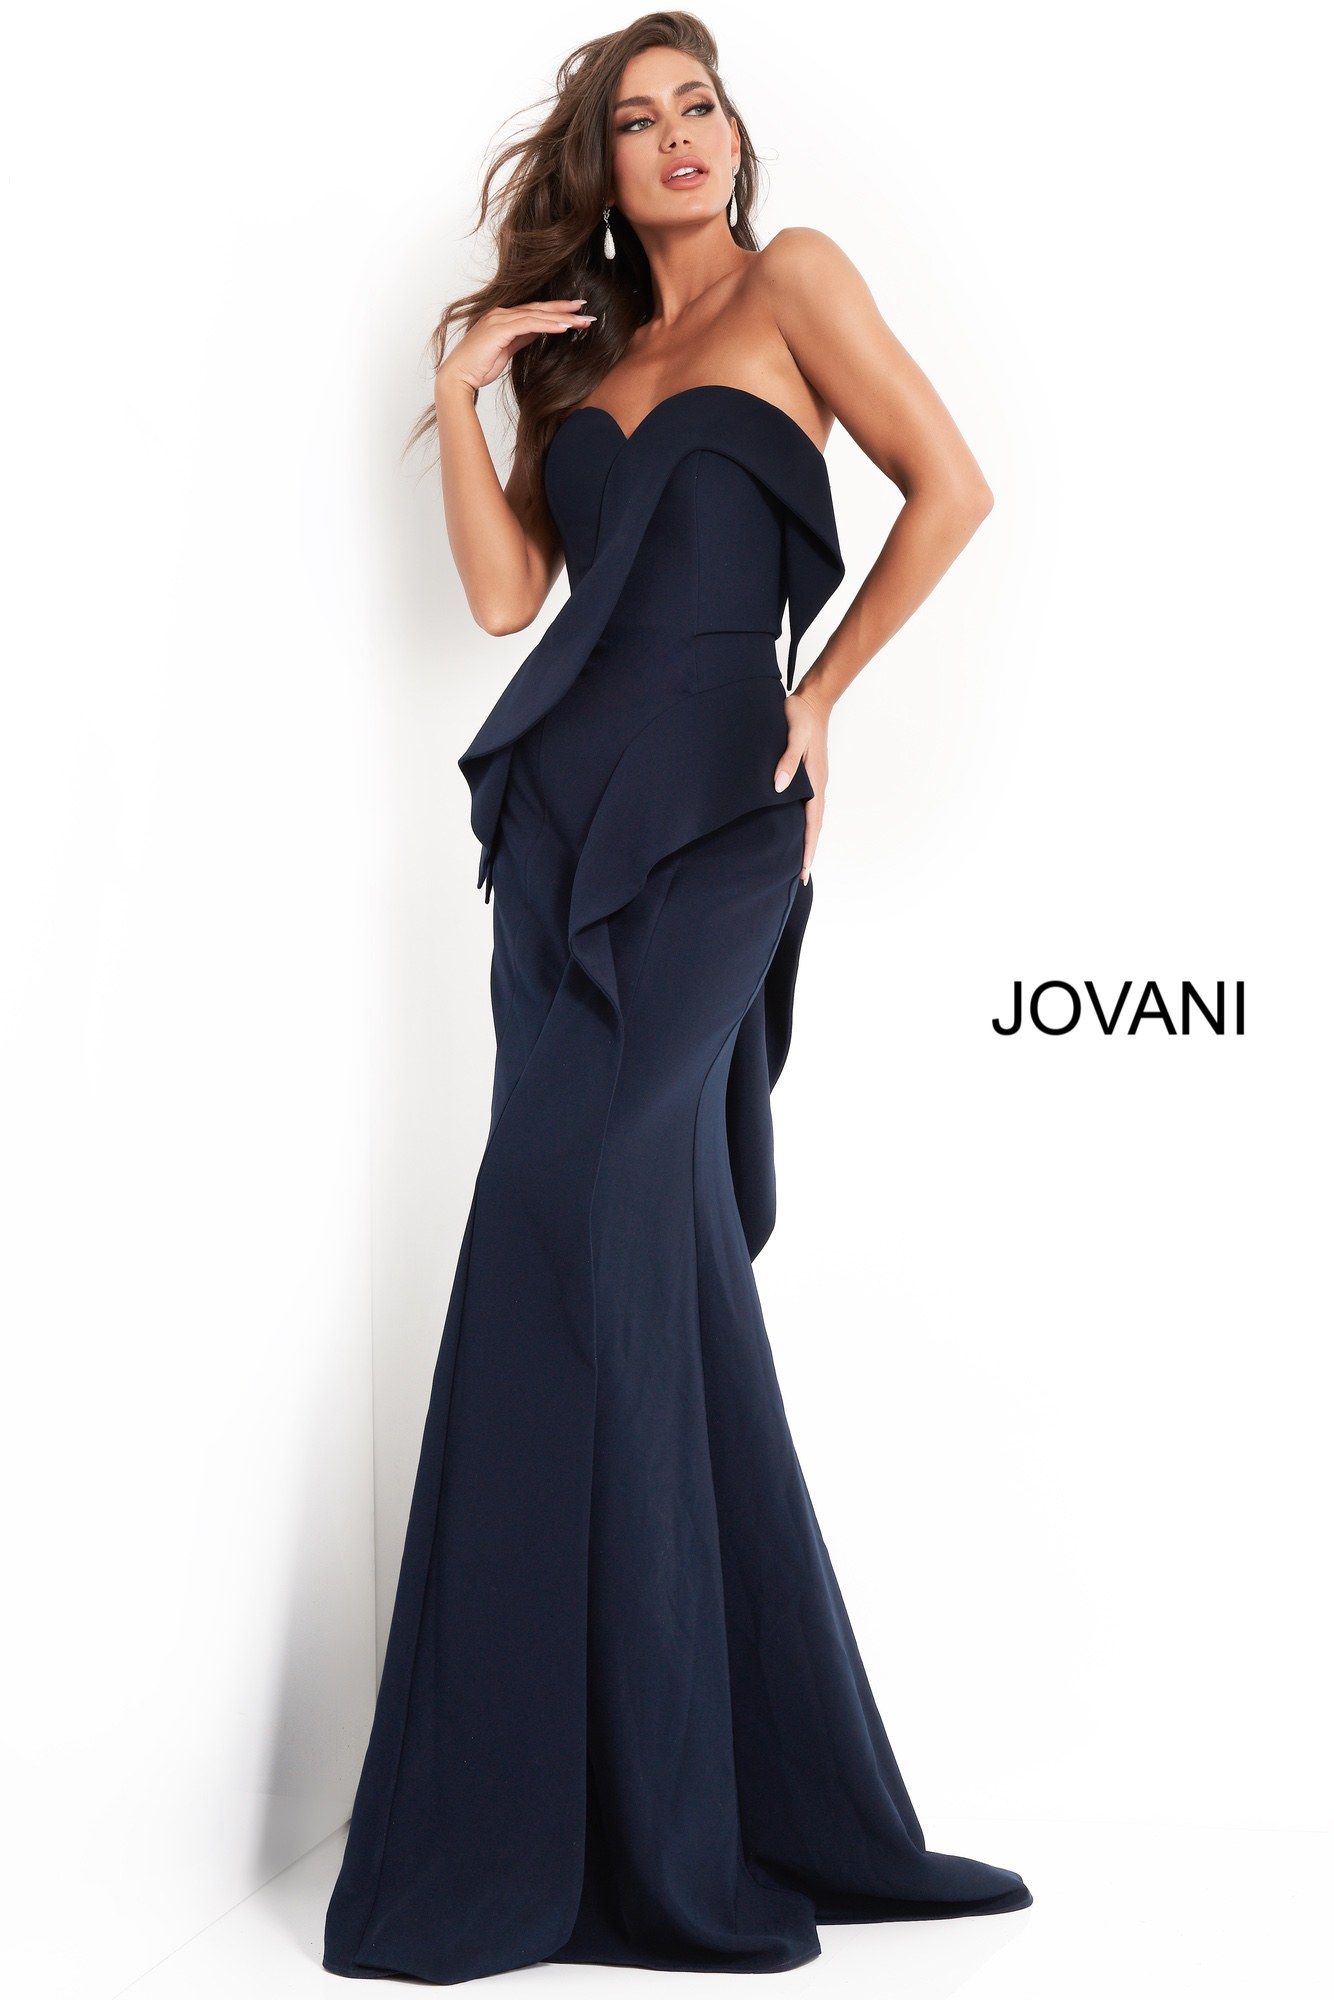 Jovani 4466 Navy Strapless Sweetheart Neckline Evening Dress